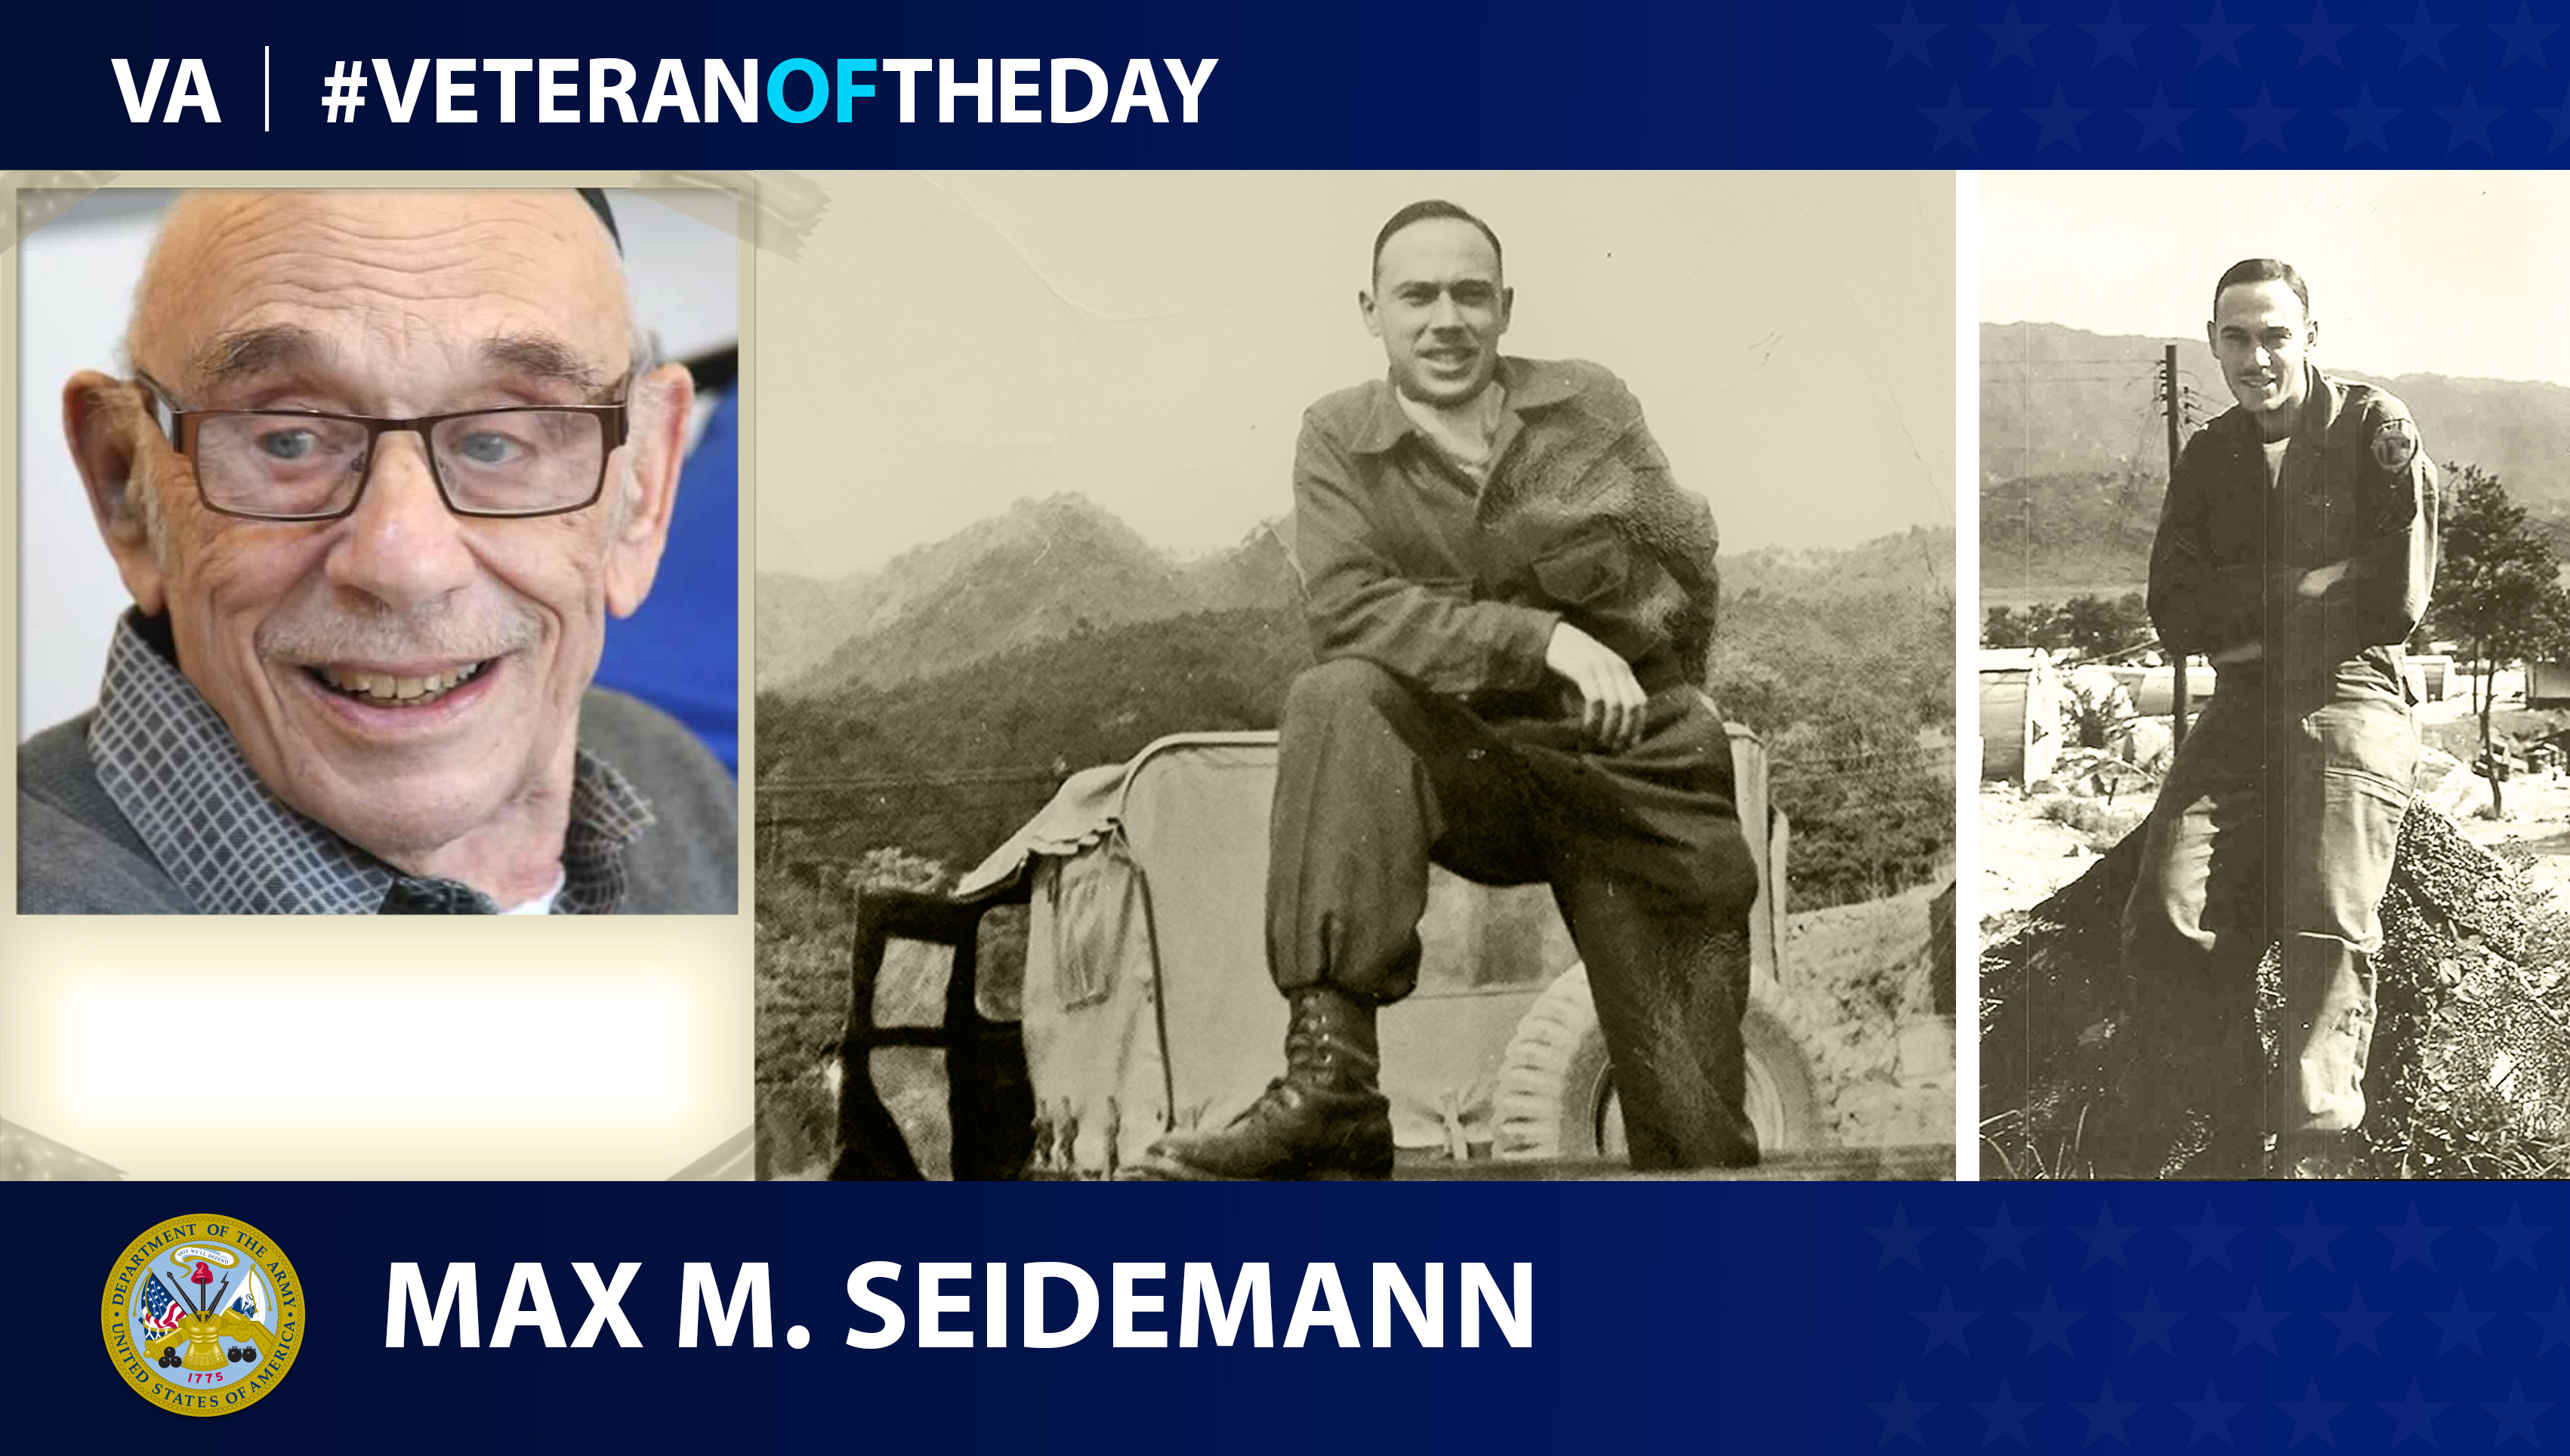 Army Veteran Max Michael Seidemann is today's Veteran of the Day.